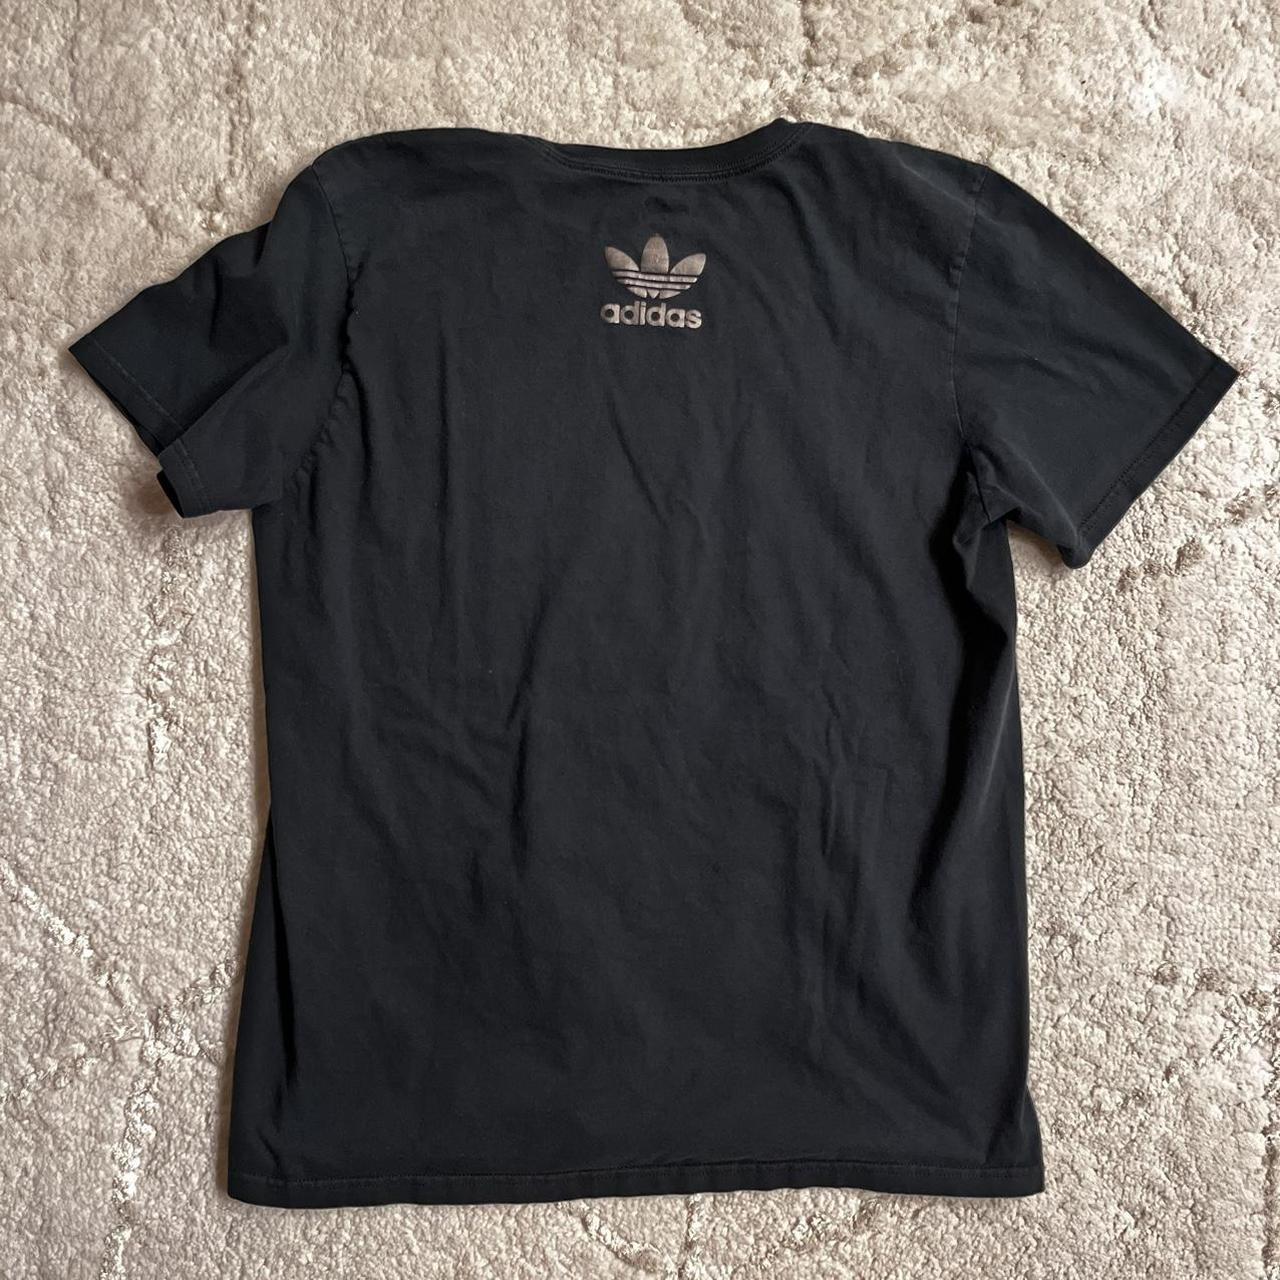 Adidas Men's Black T-shirt (2)